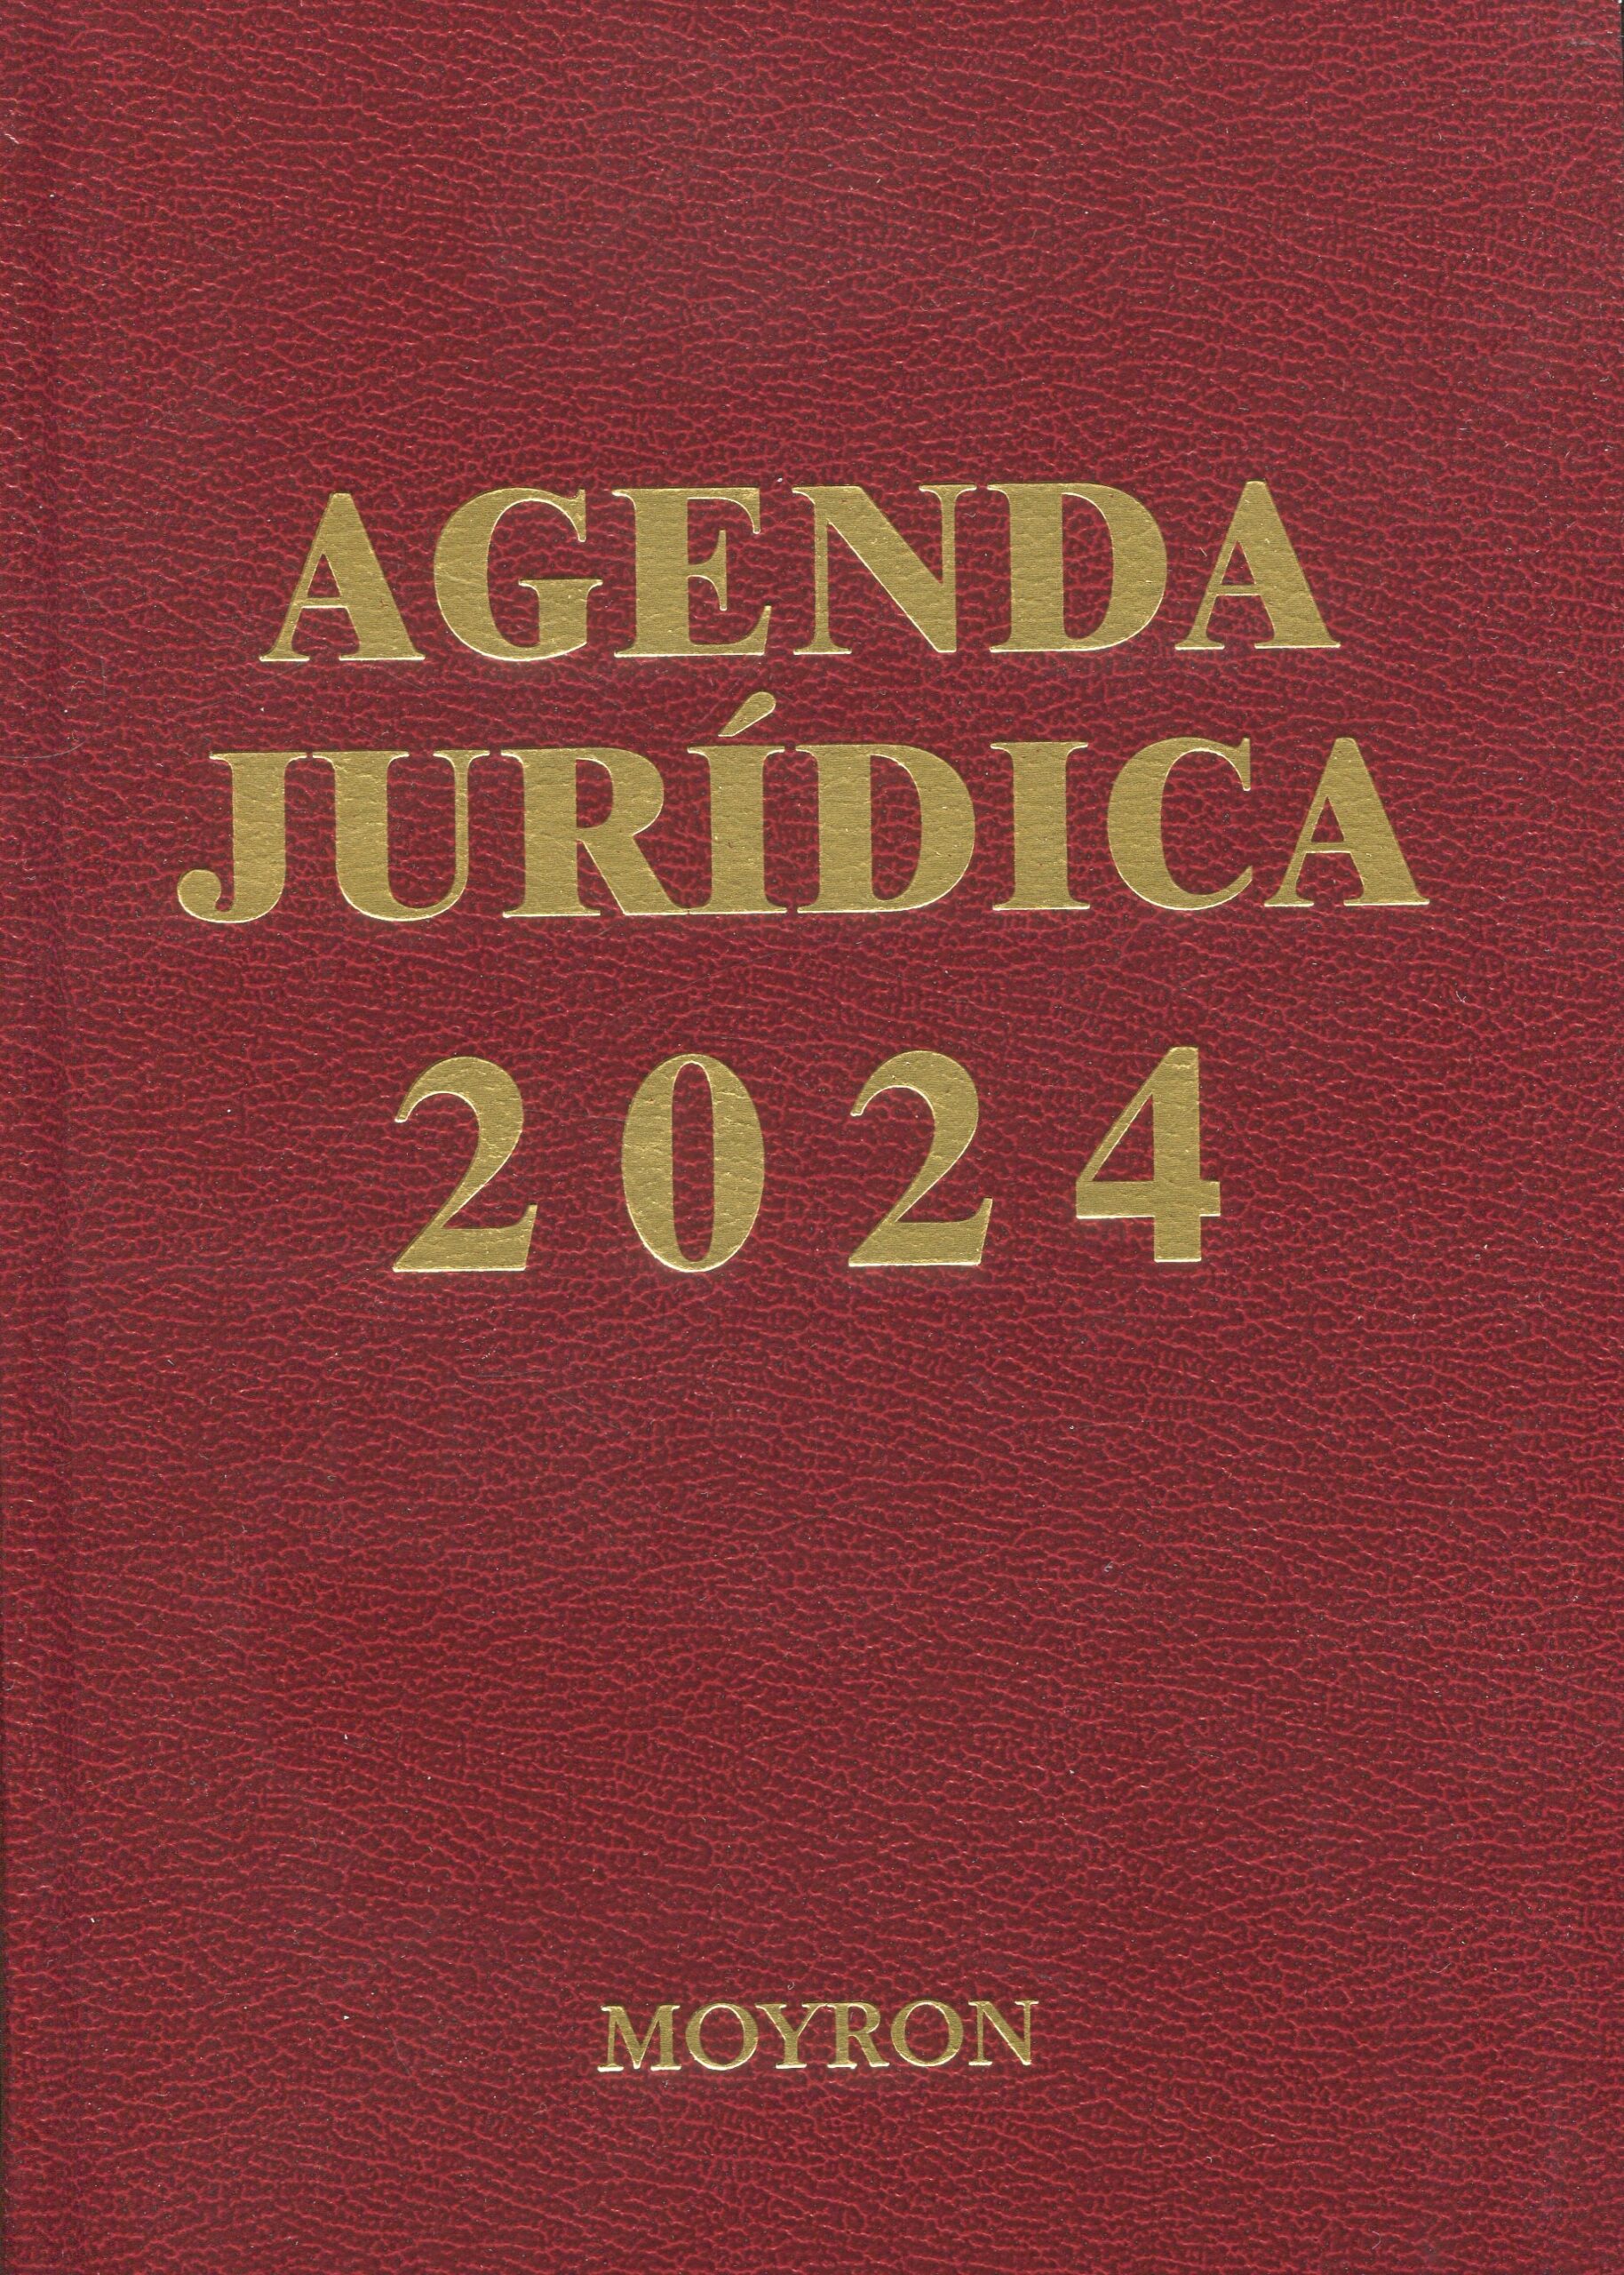 Agenda jurídica Moyron 2024 Granate 9788460501X24